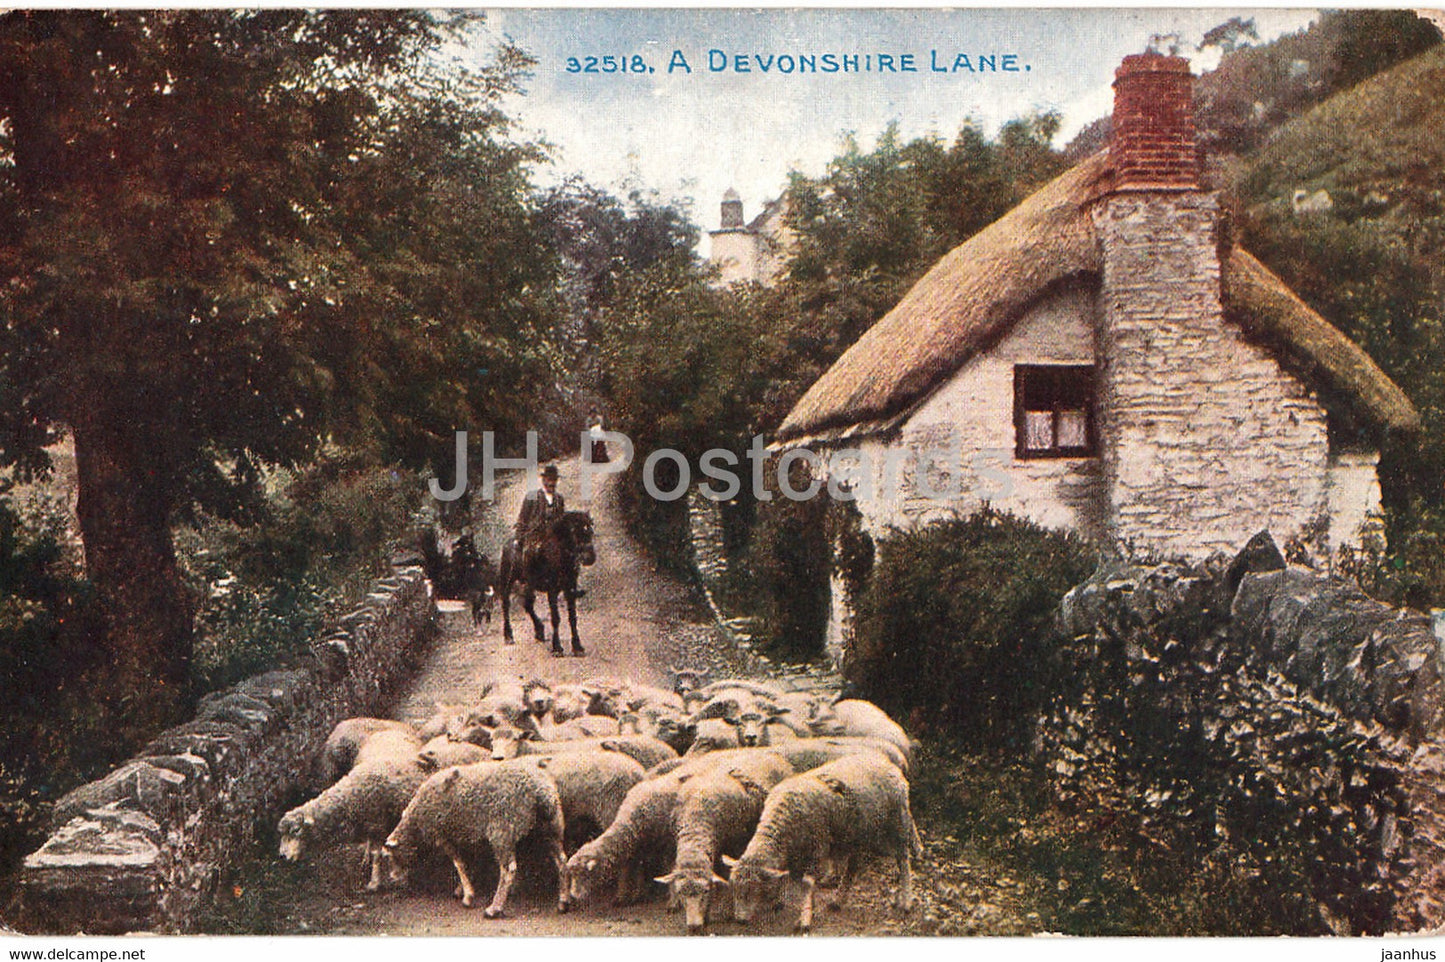 A Devonshire Lane - sheep - old postcard - 1922 - England - United Kingdom - used - JH Postcards